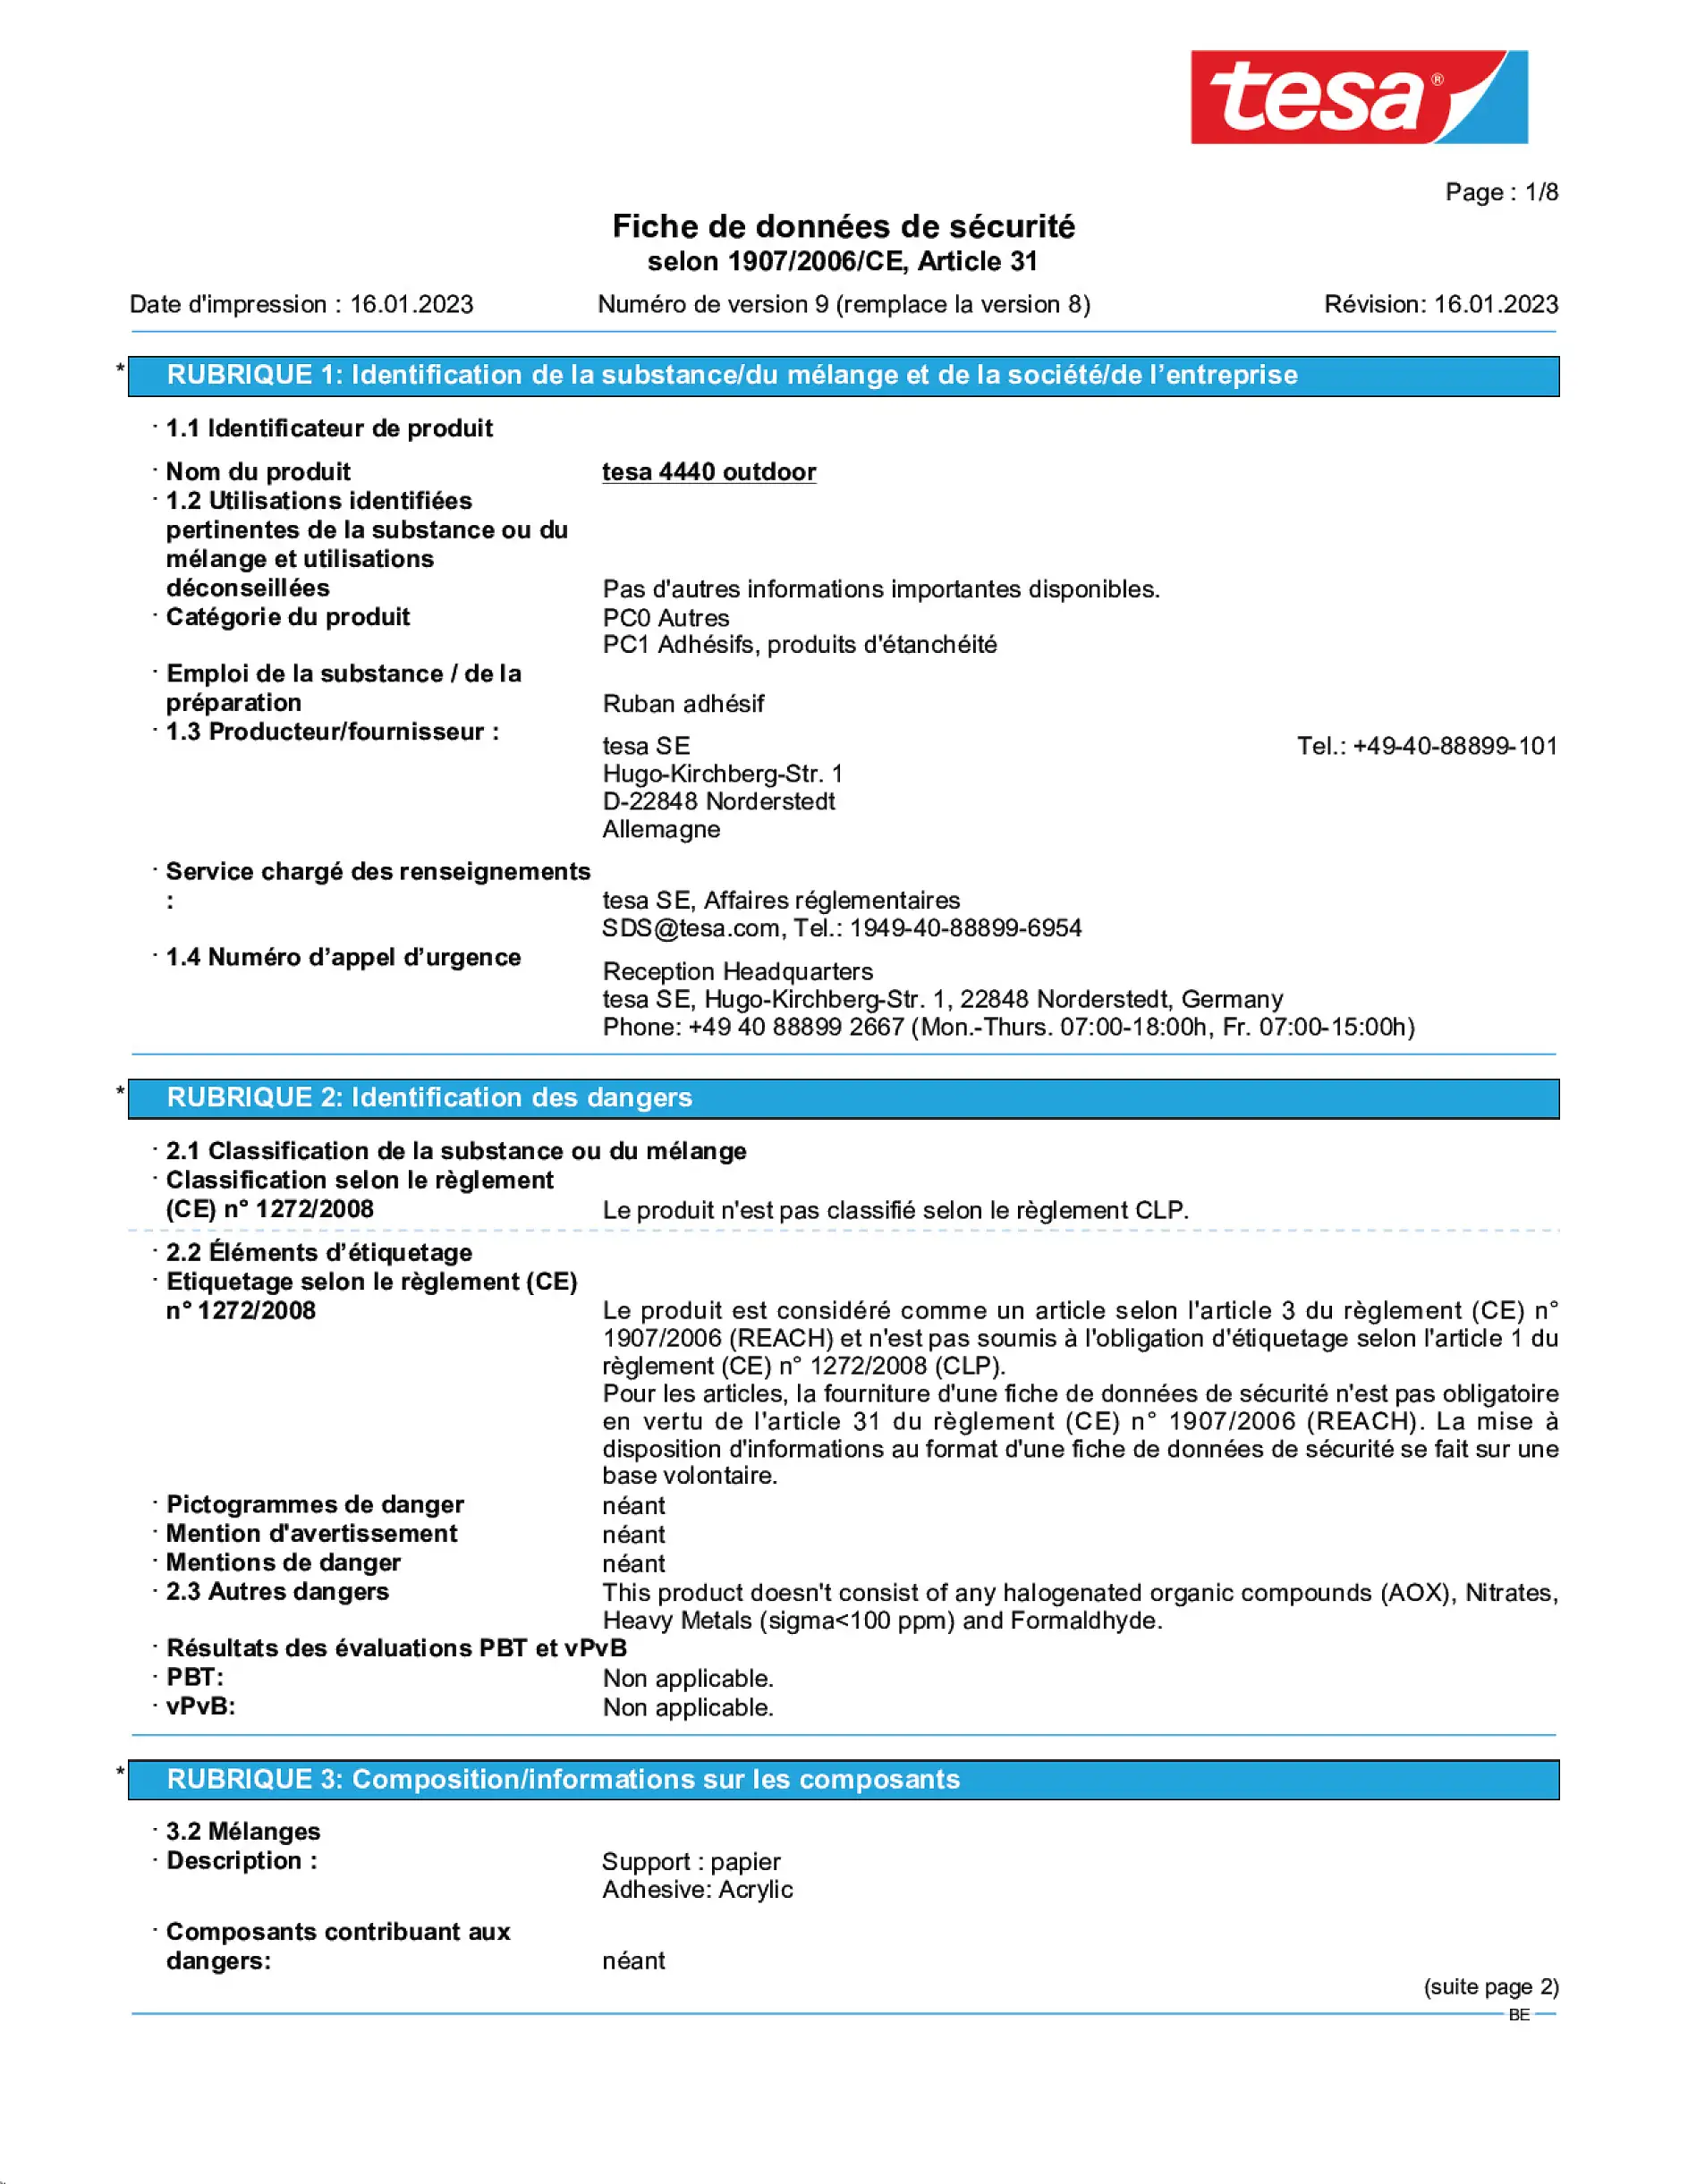 Safety data sheet_tesa® Professional 04440_nl-BE_v9